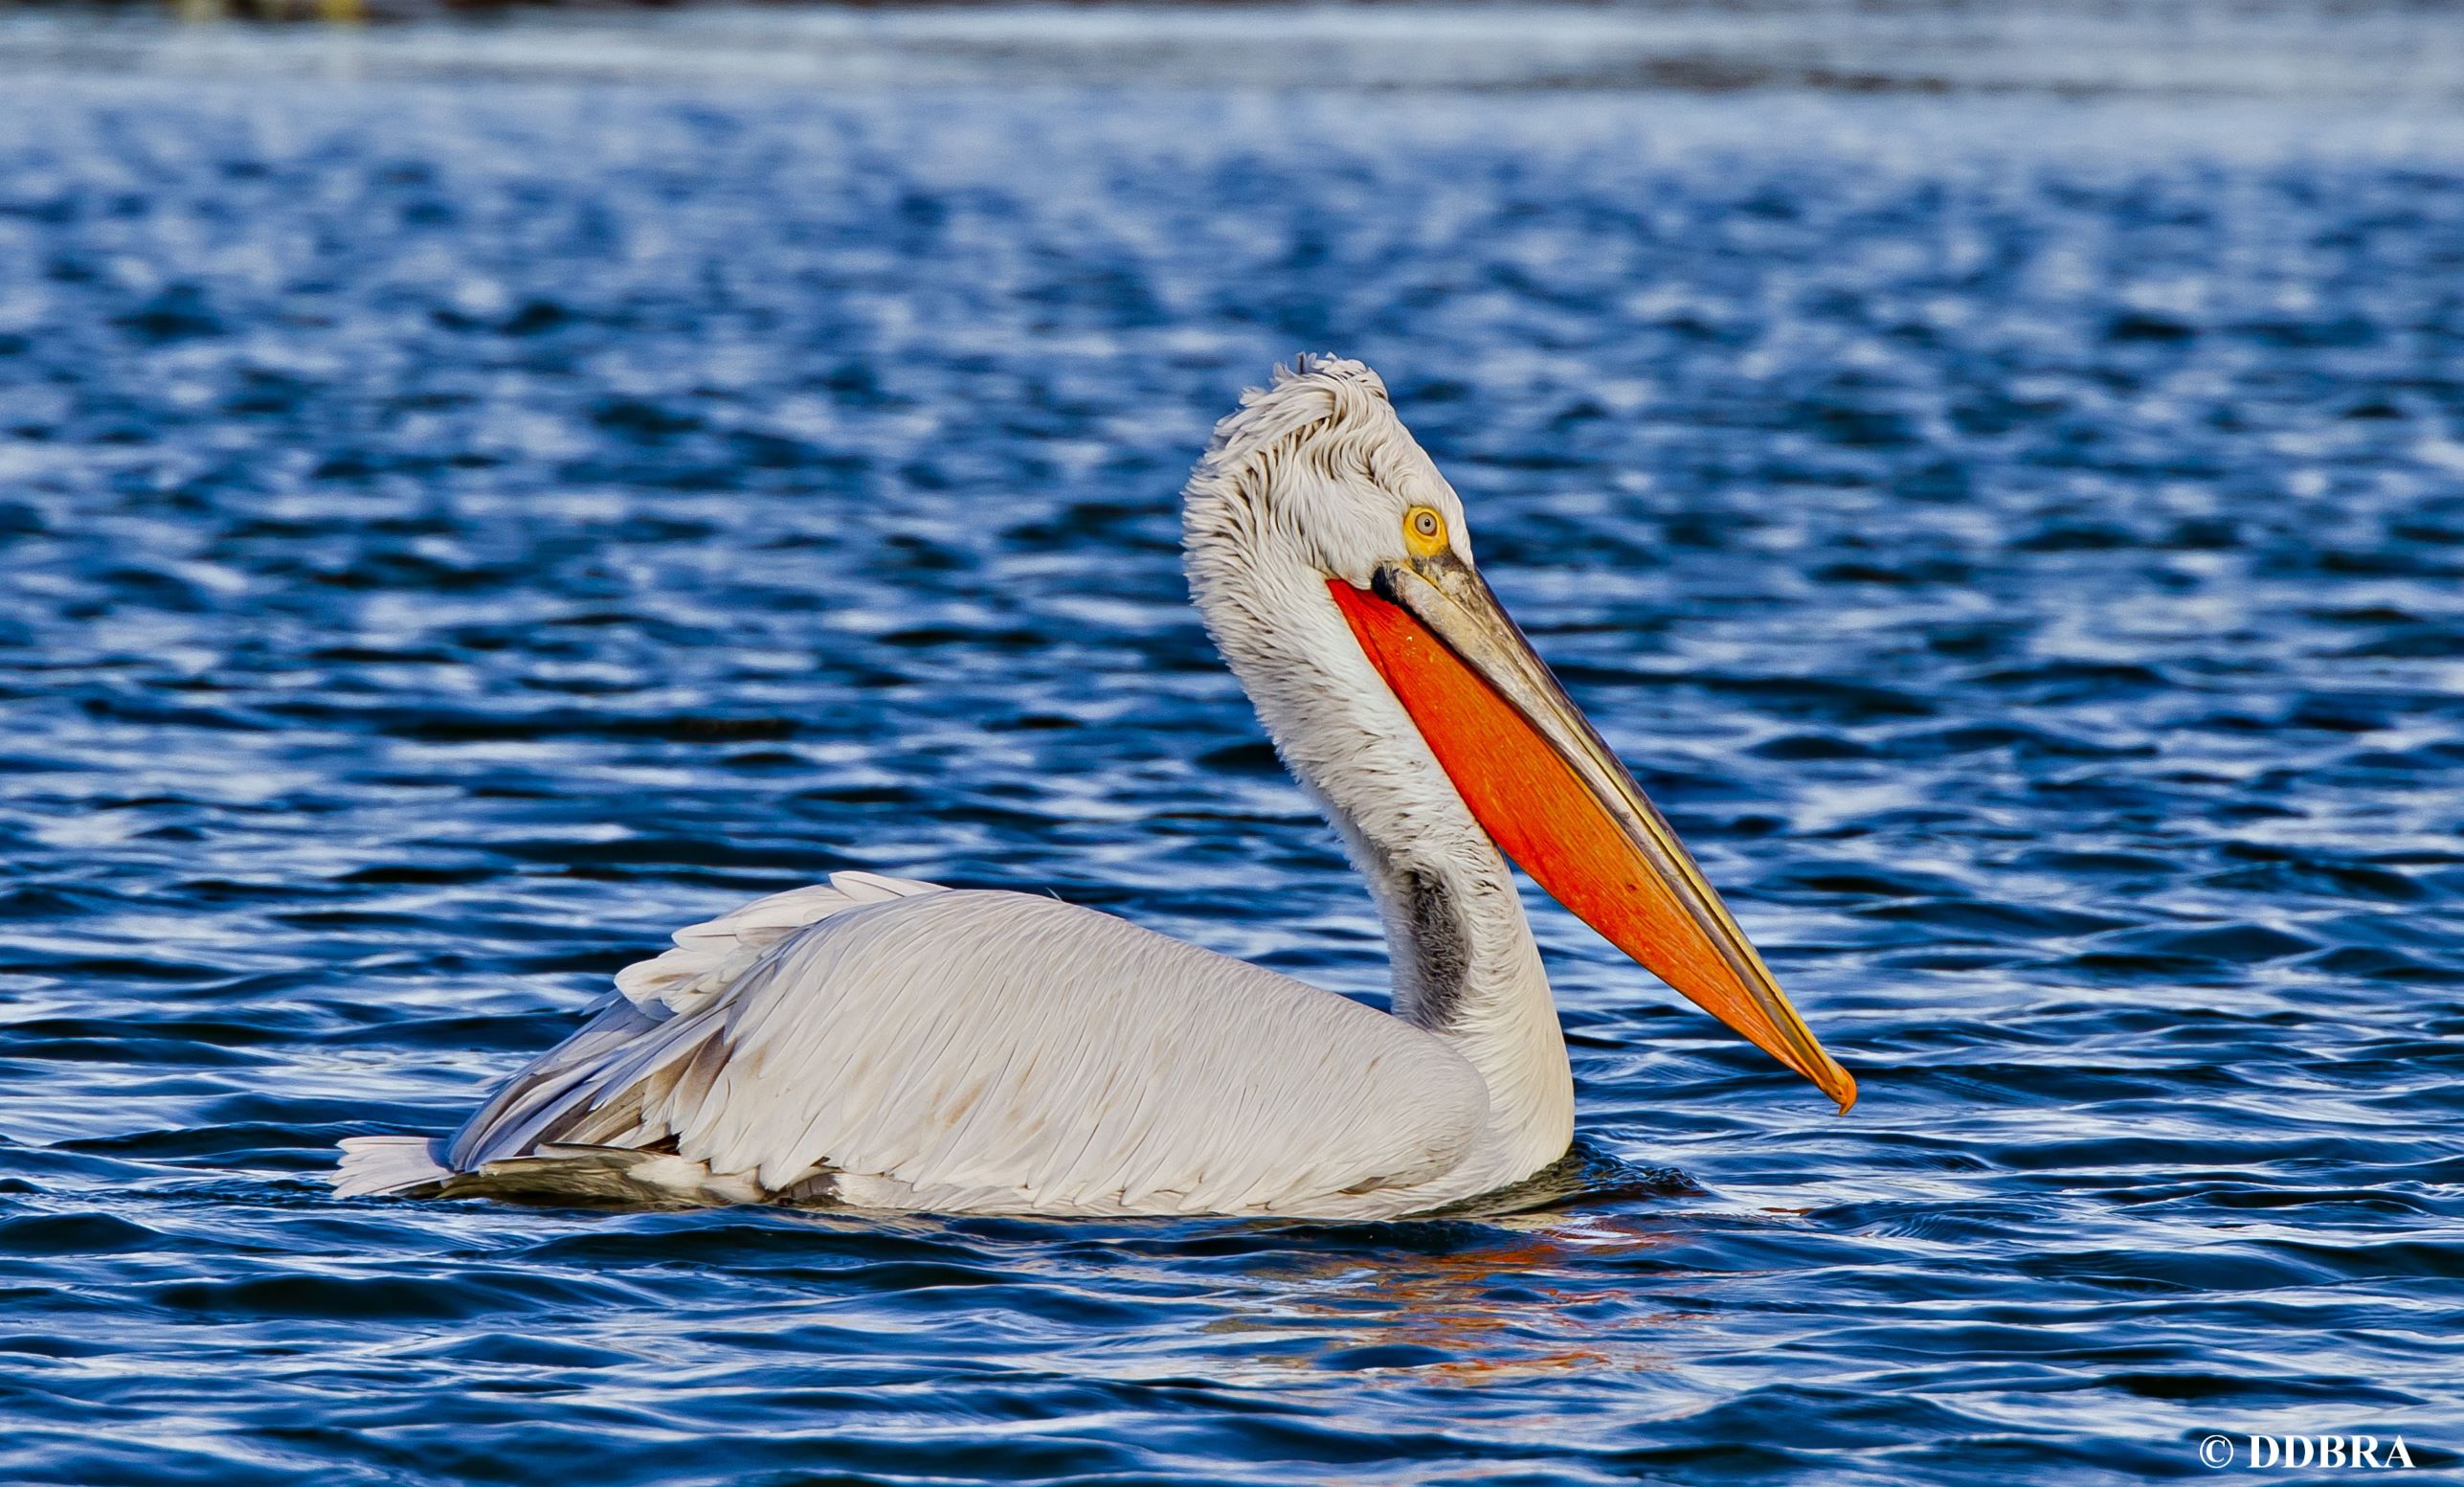 Picture of the Dalmatian pelican - Pelecanus crispus in the lake